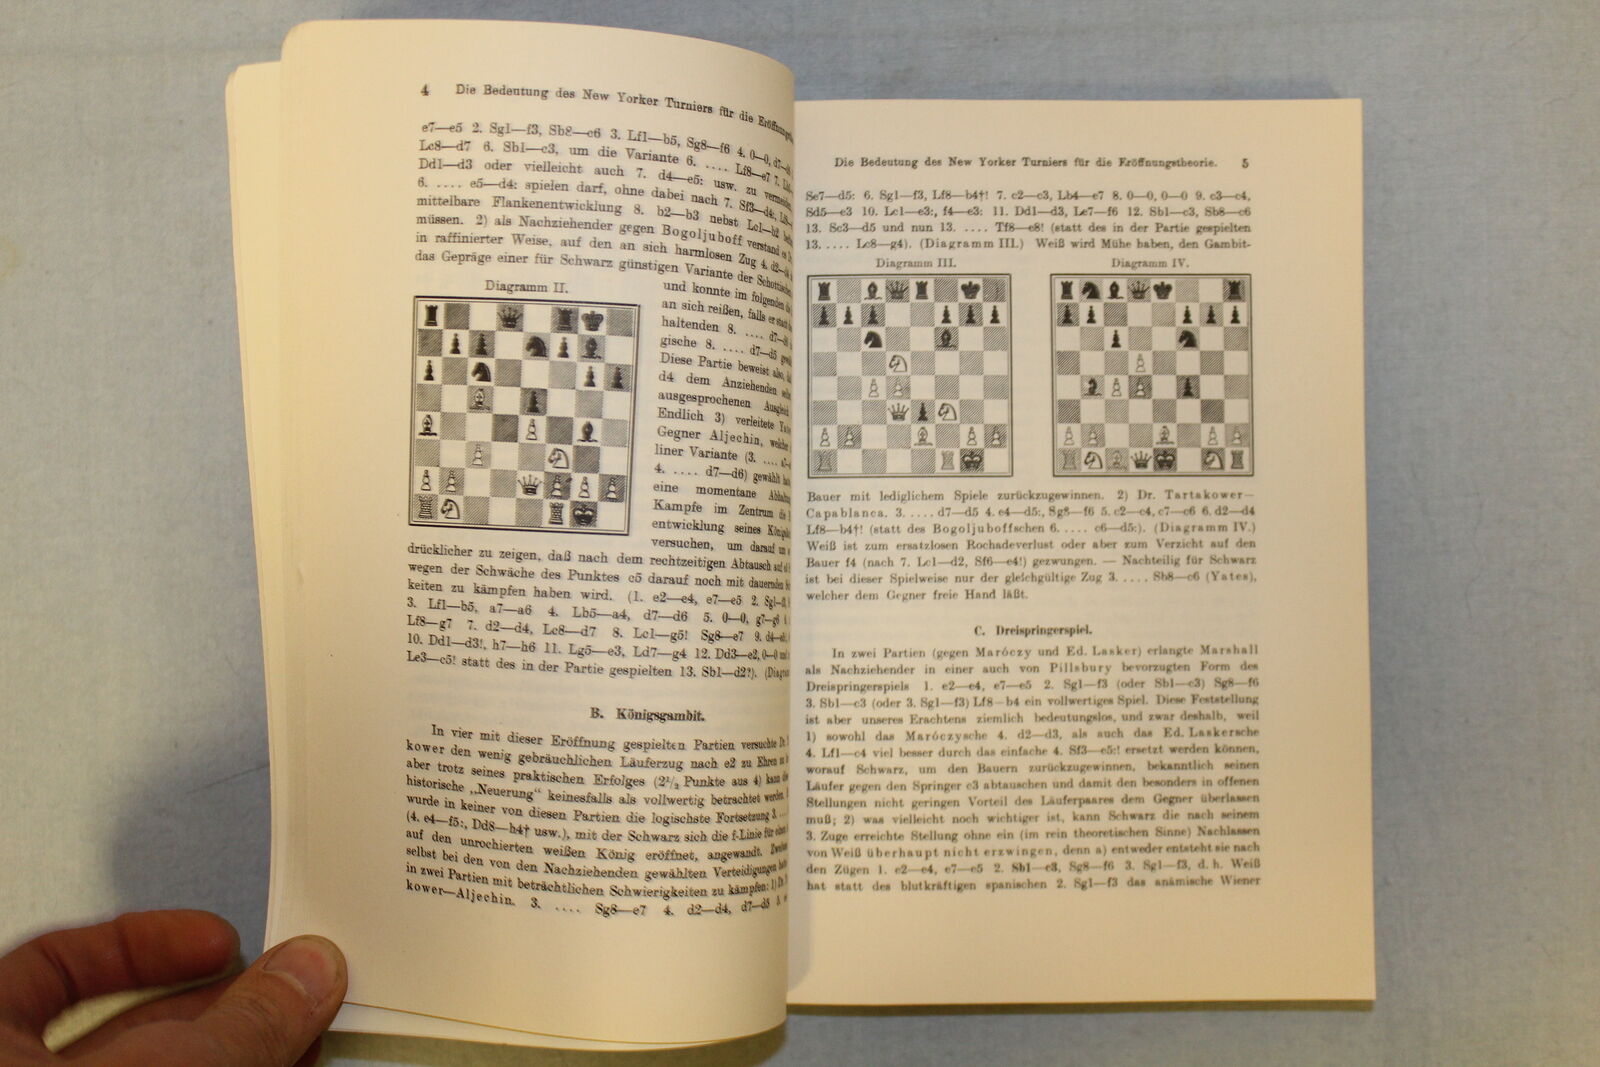 11316.German chess book:.A Aljechin. Grand Master tournament in New York in 1924. 1963